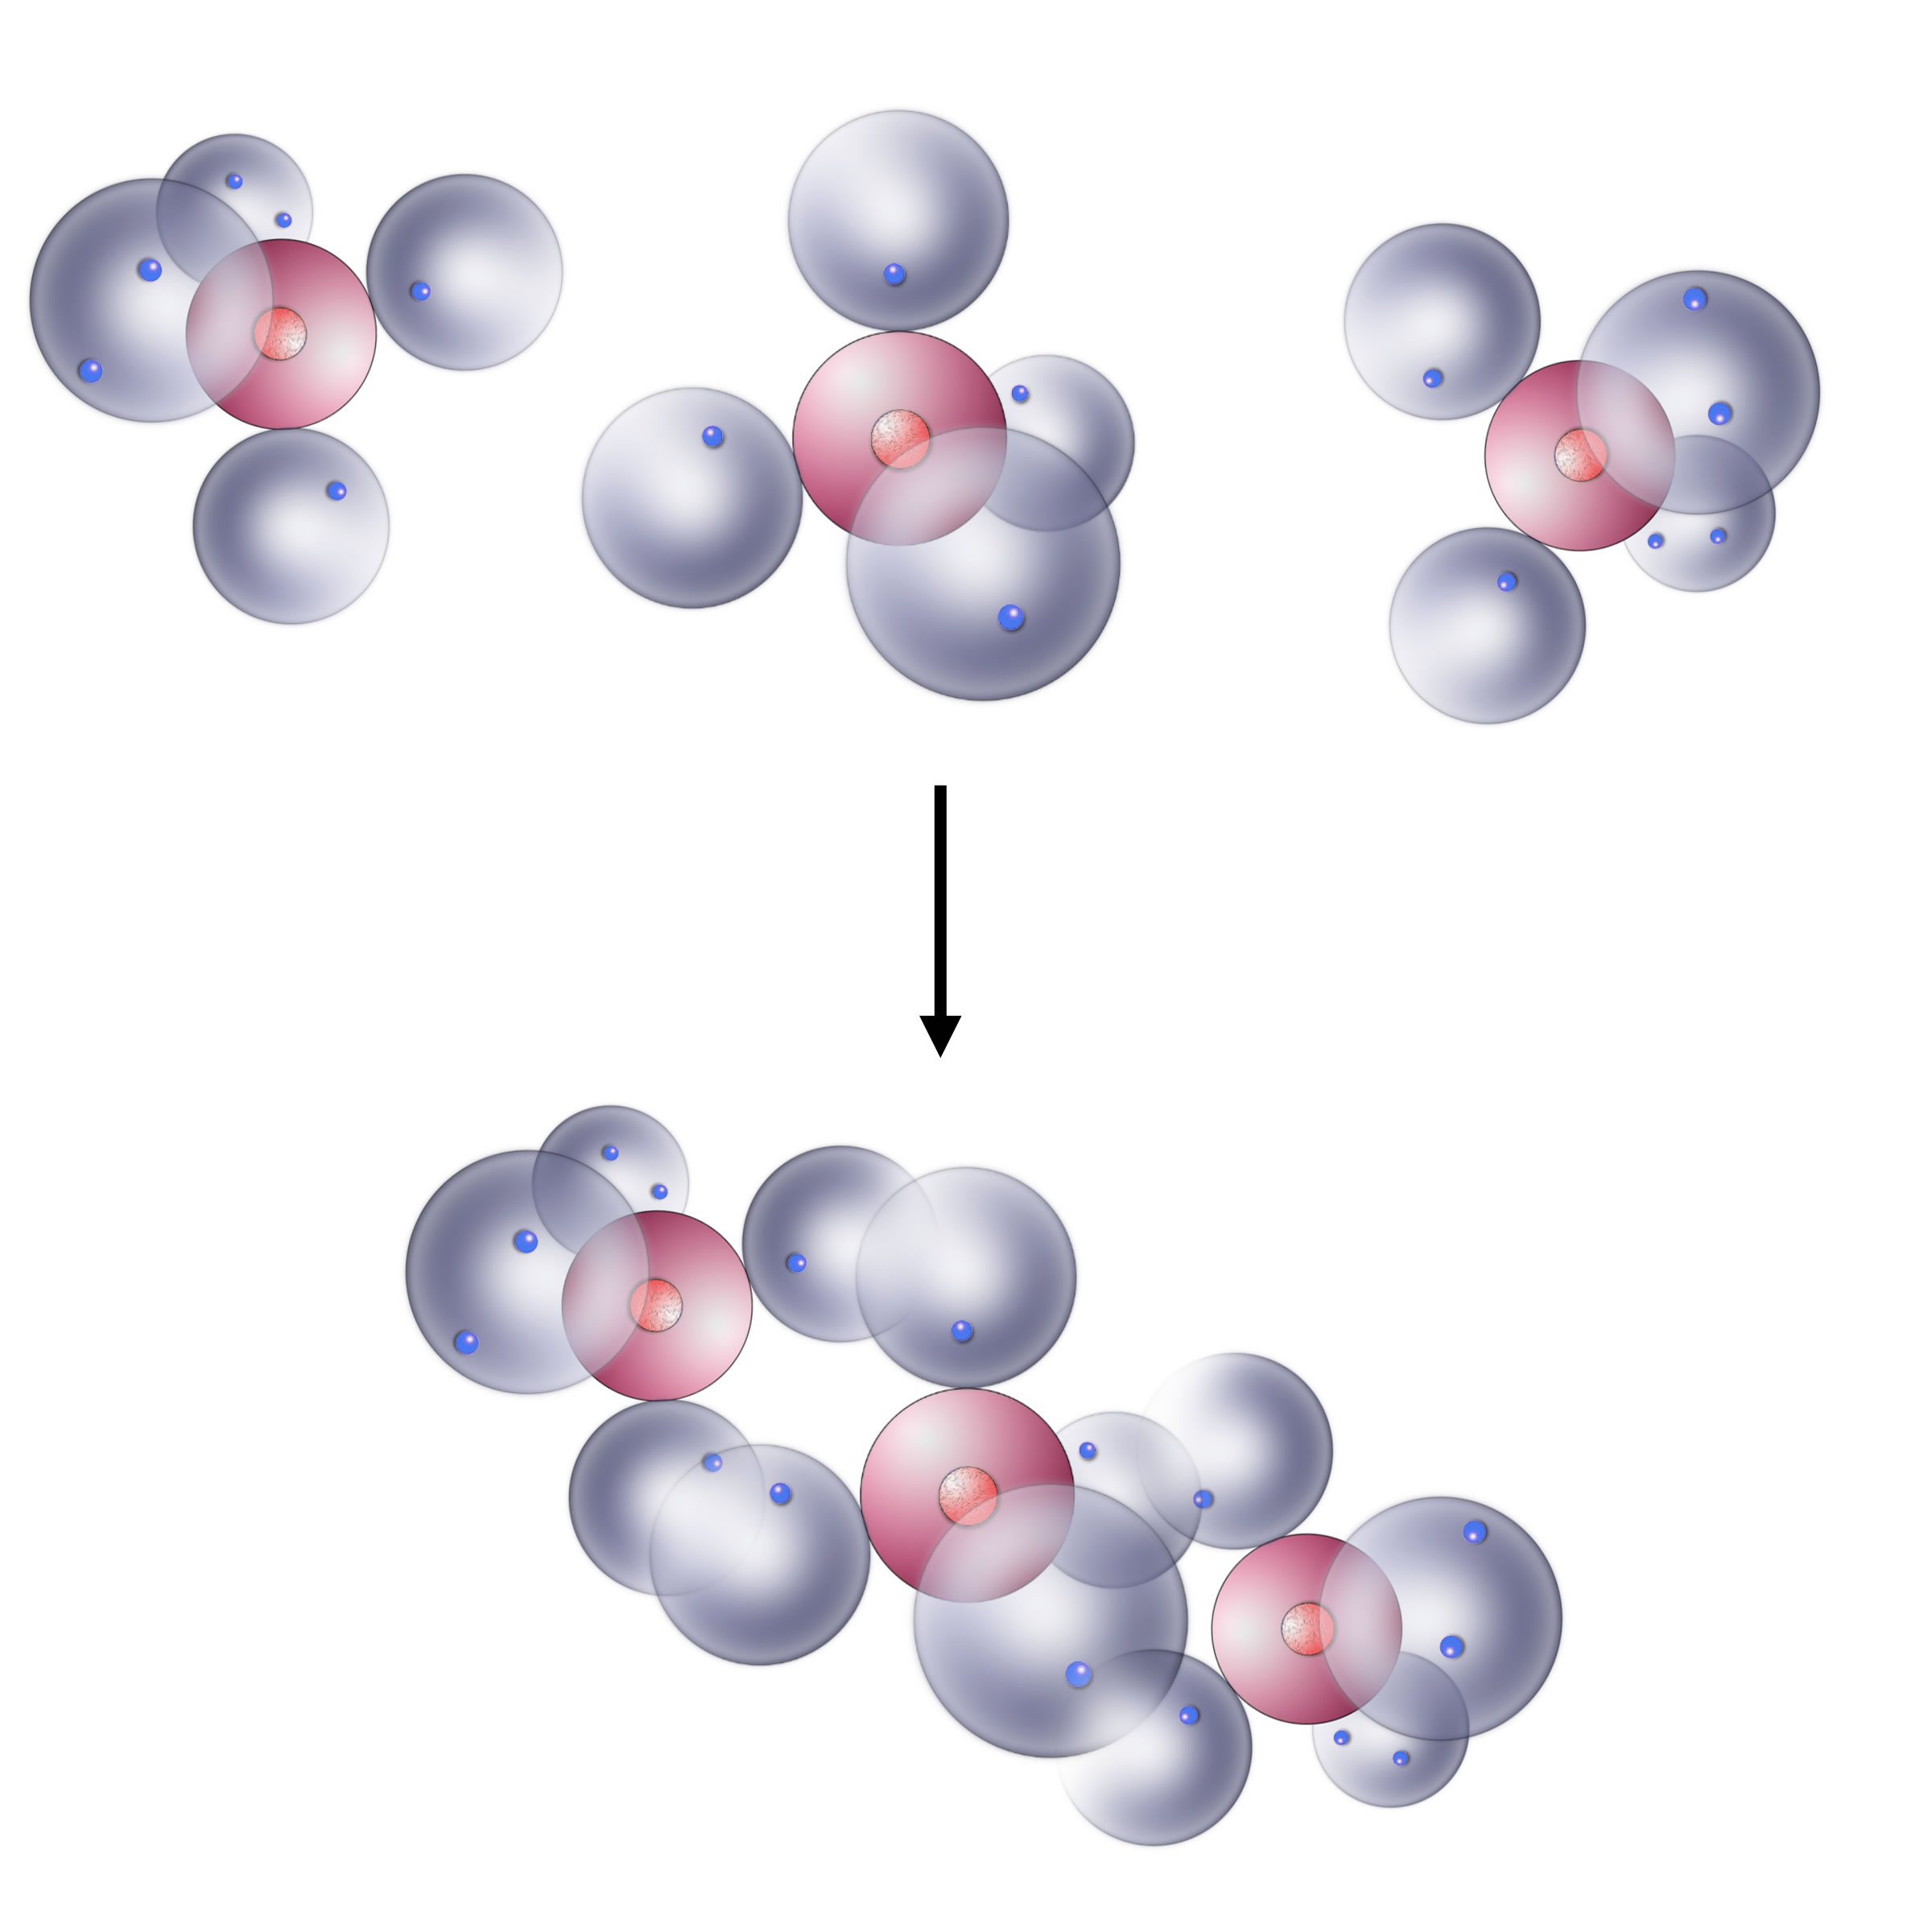 Das CO2-Molekül im Kugelwolkenmodell